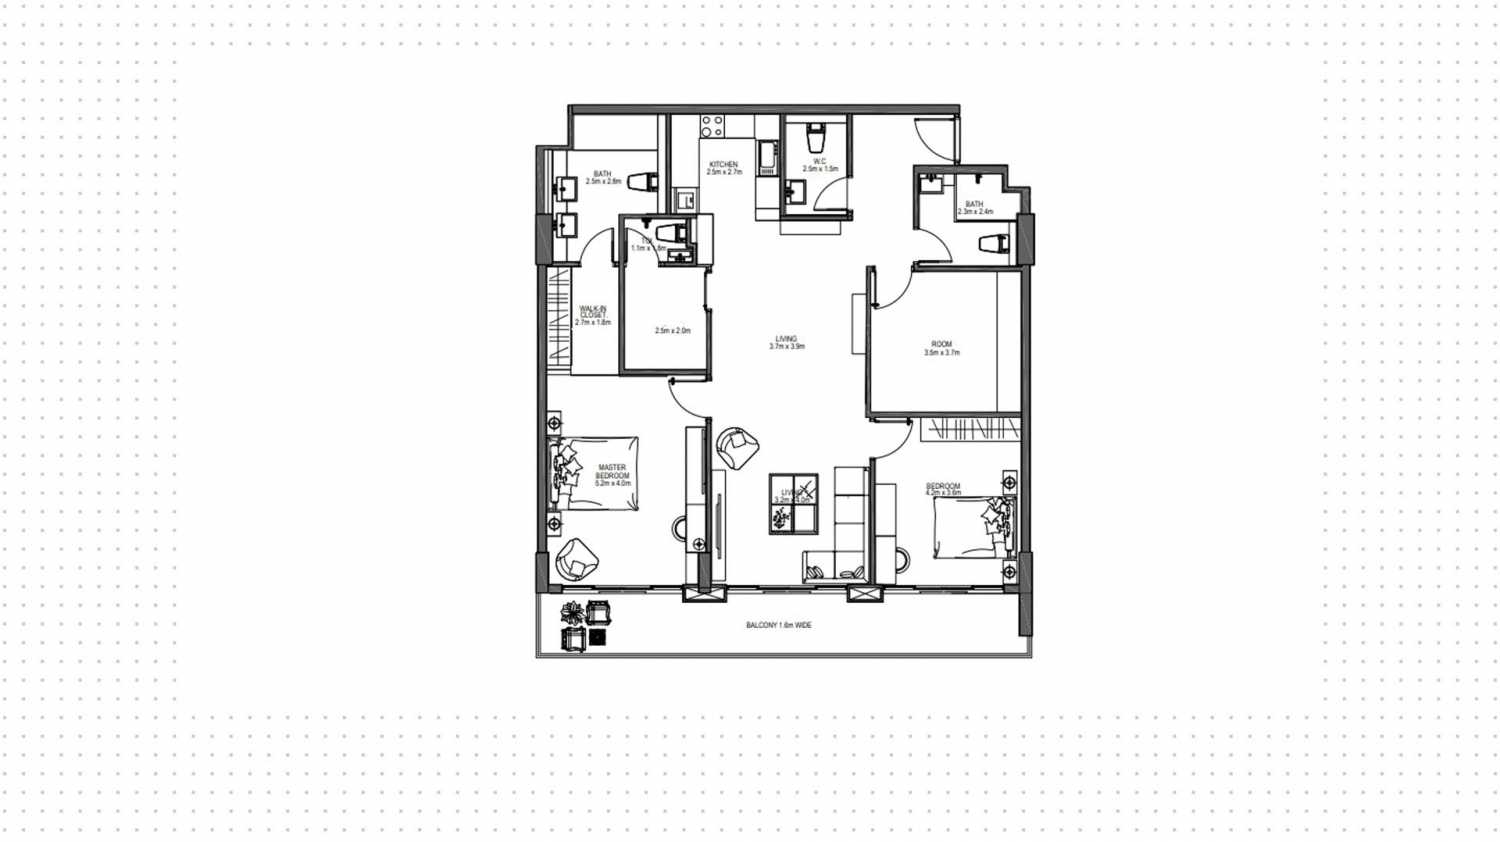 2-bedroom apartment-0-1